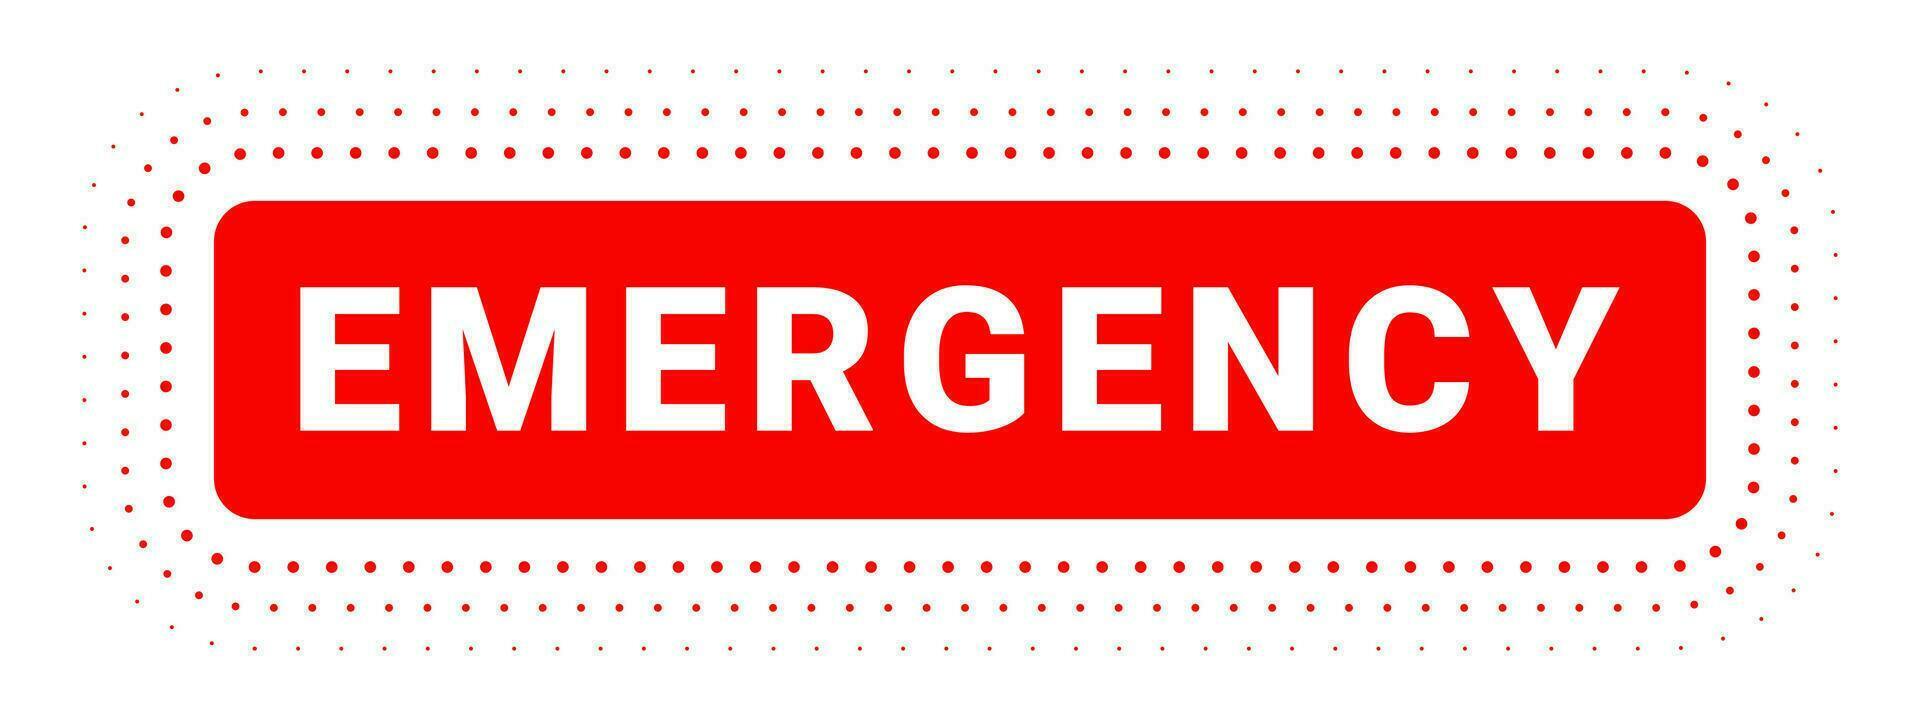 bandera emergencia. emergencia insignia. emergencia accidente signo. vector escalable gráficos